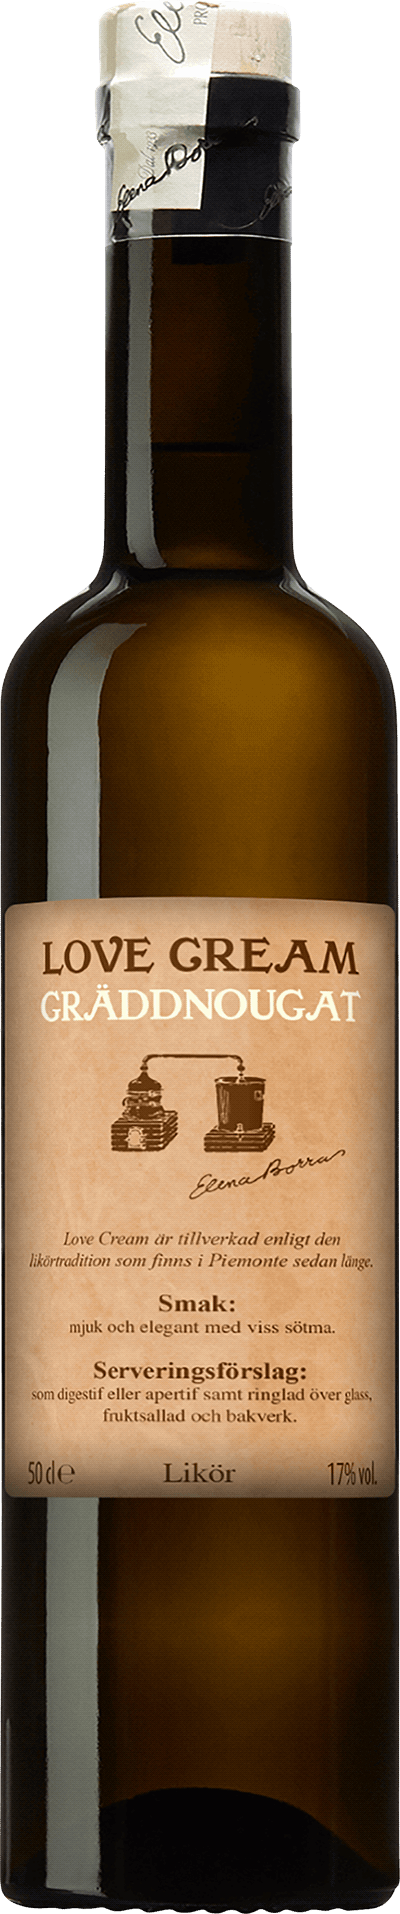 Love Cream Gräddnougat